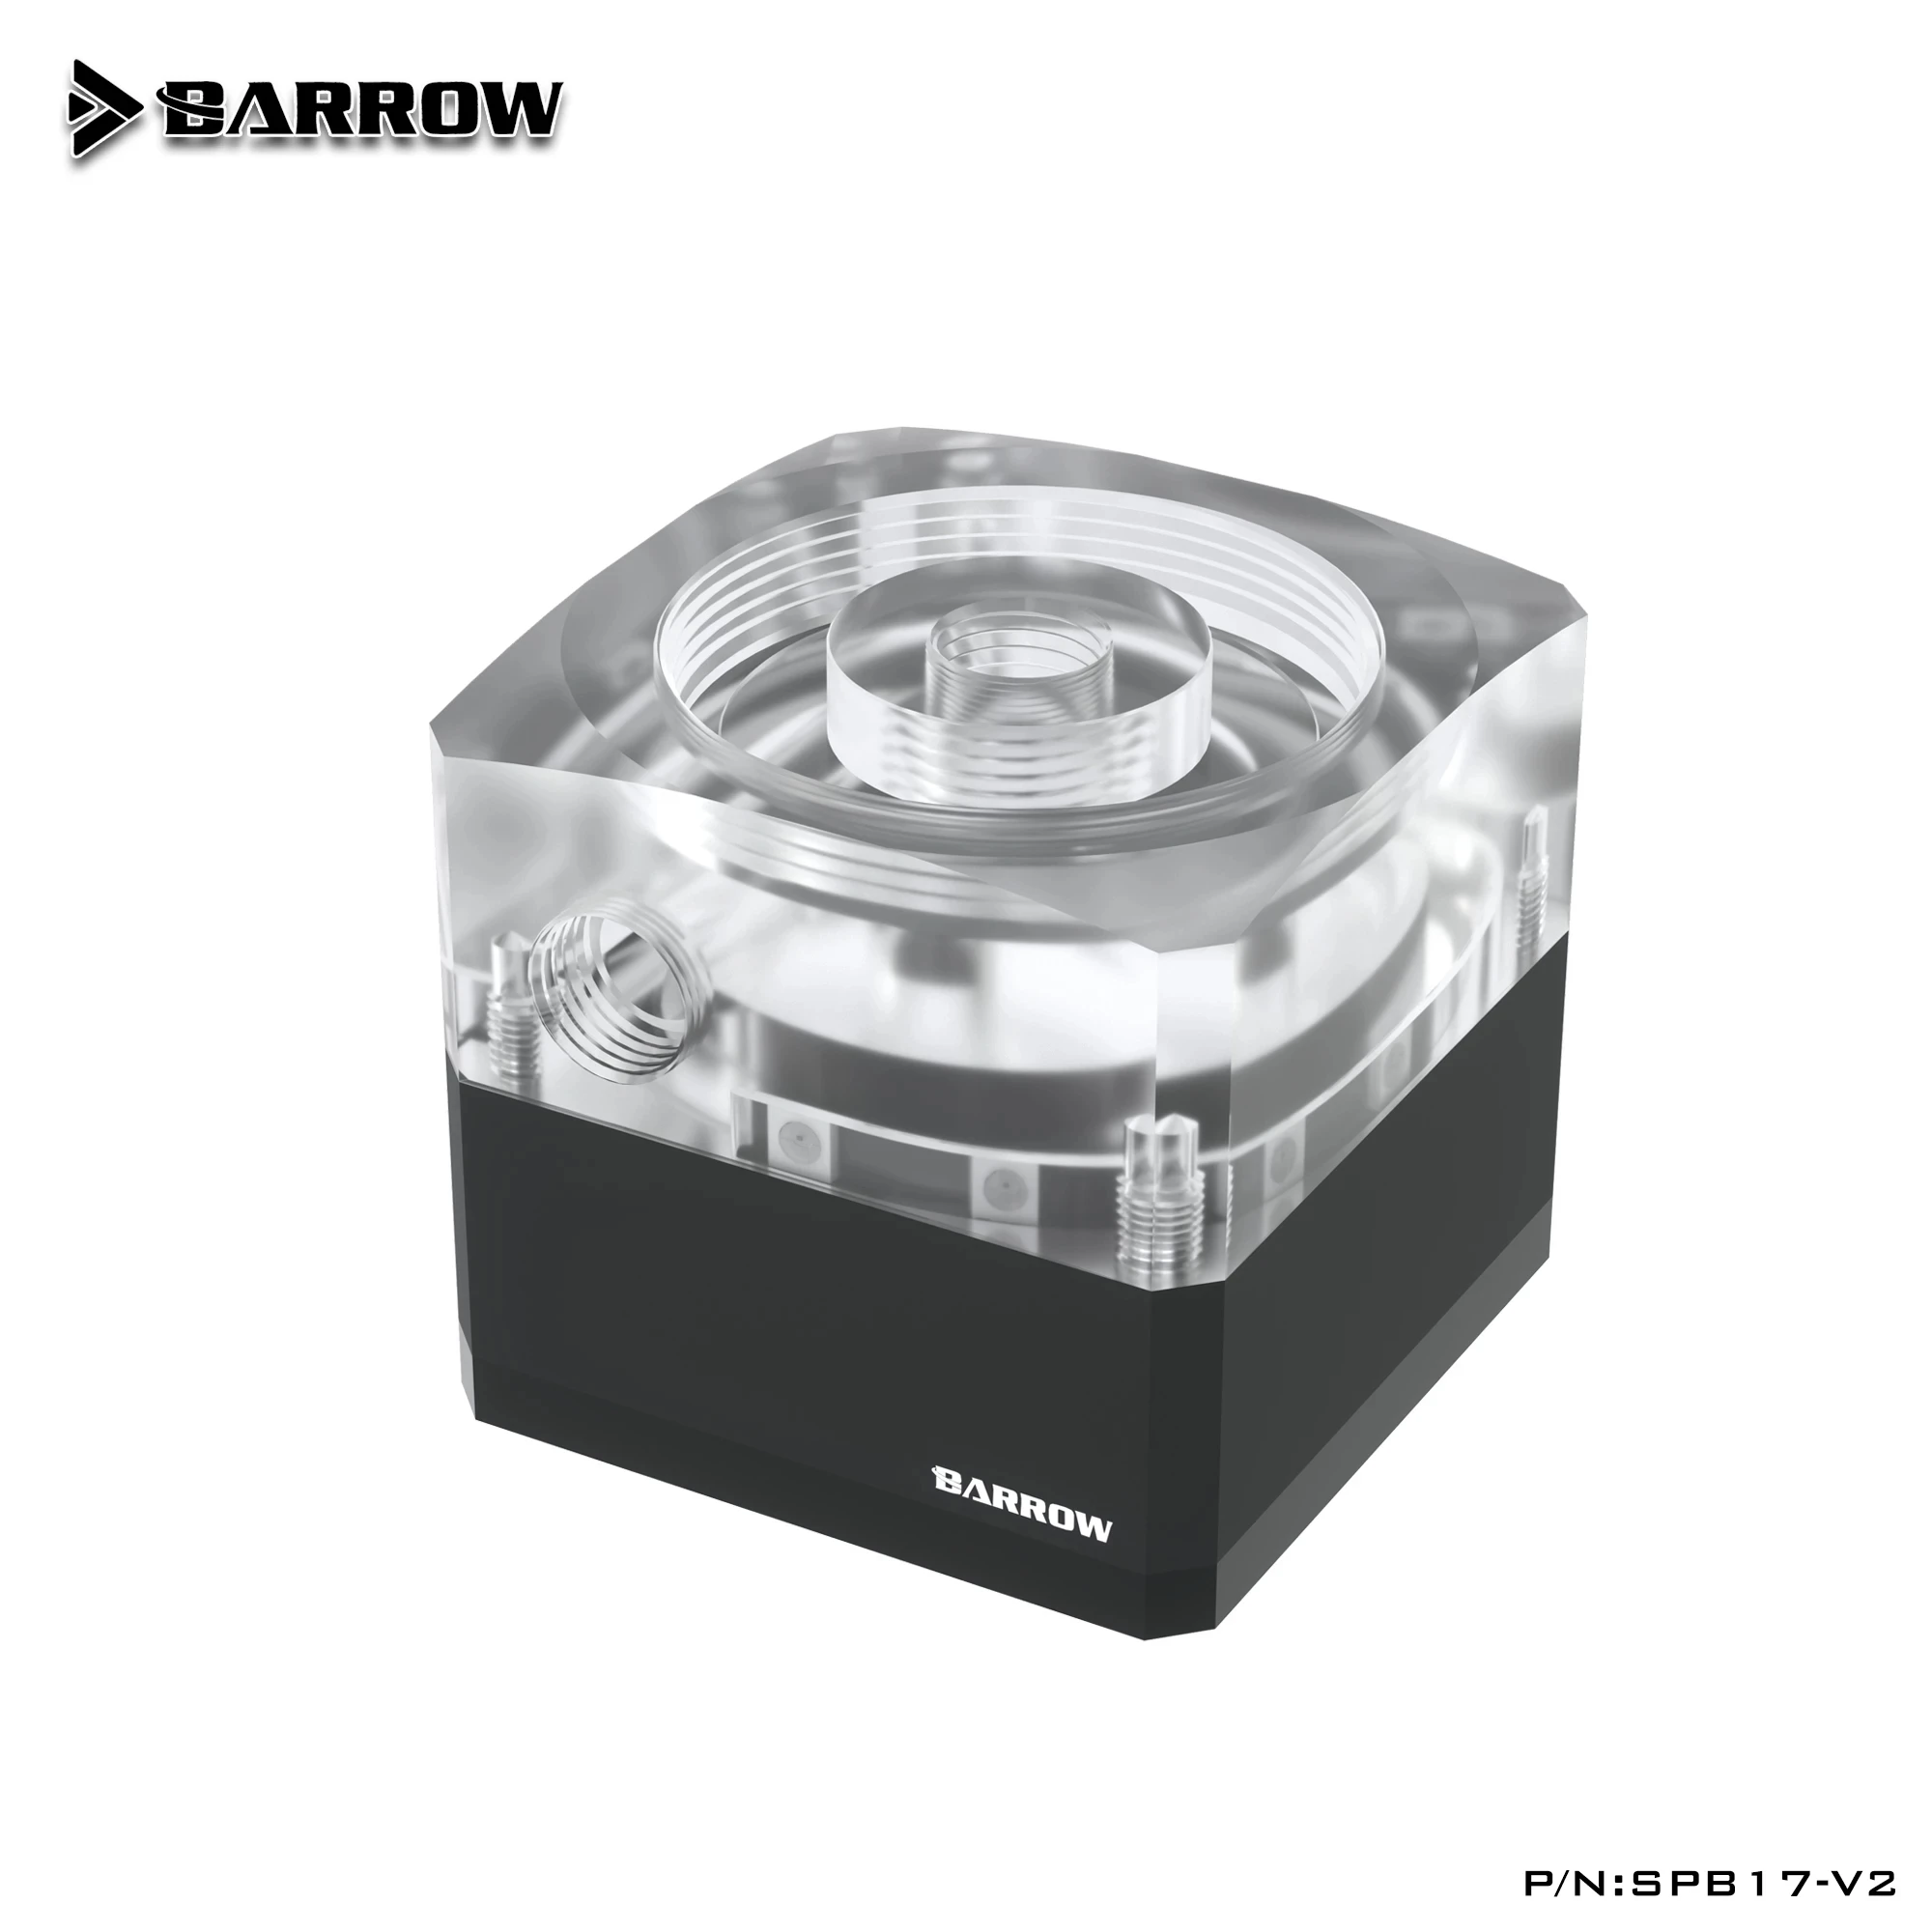 Barrow CPU Water Cooling Kit 240 Radiator Kit PC System Cooler G1/4' Fittings Hose Tube